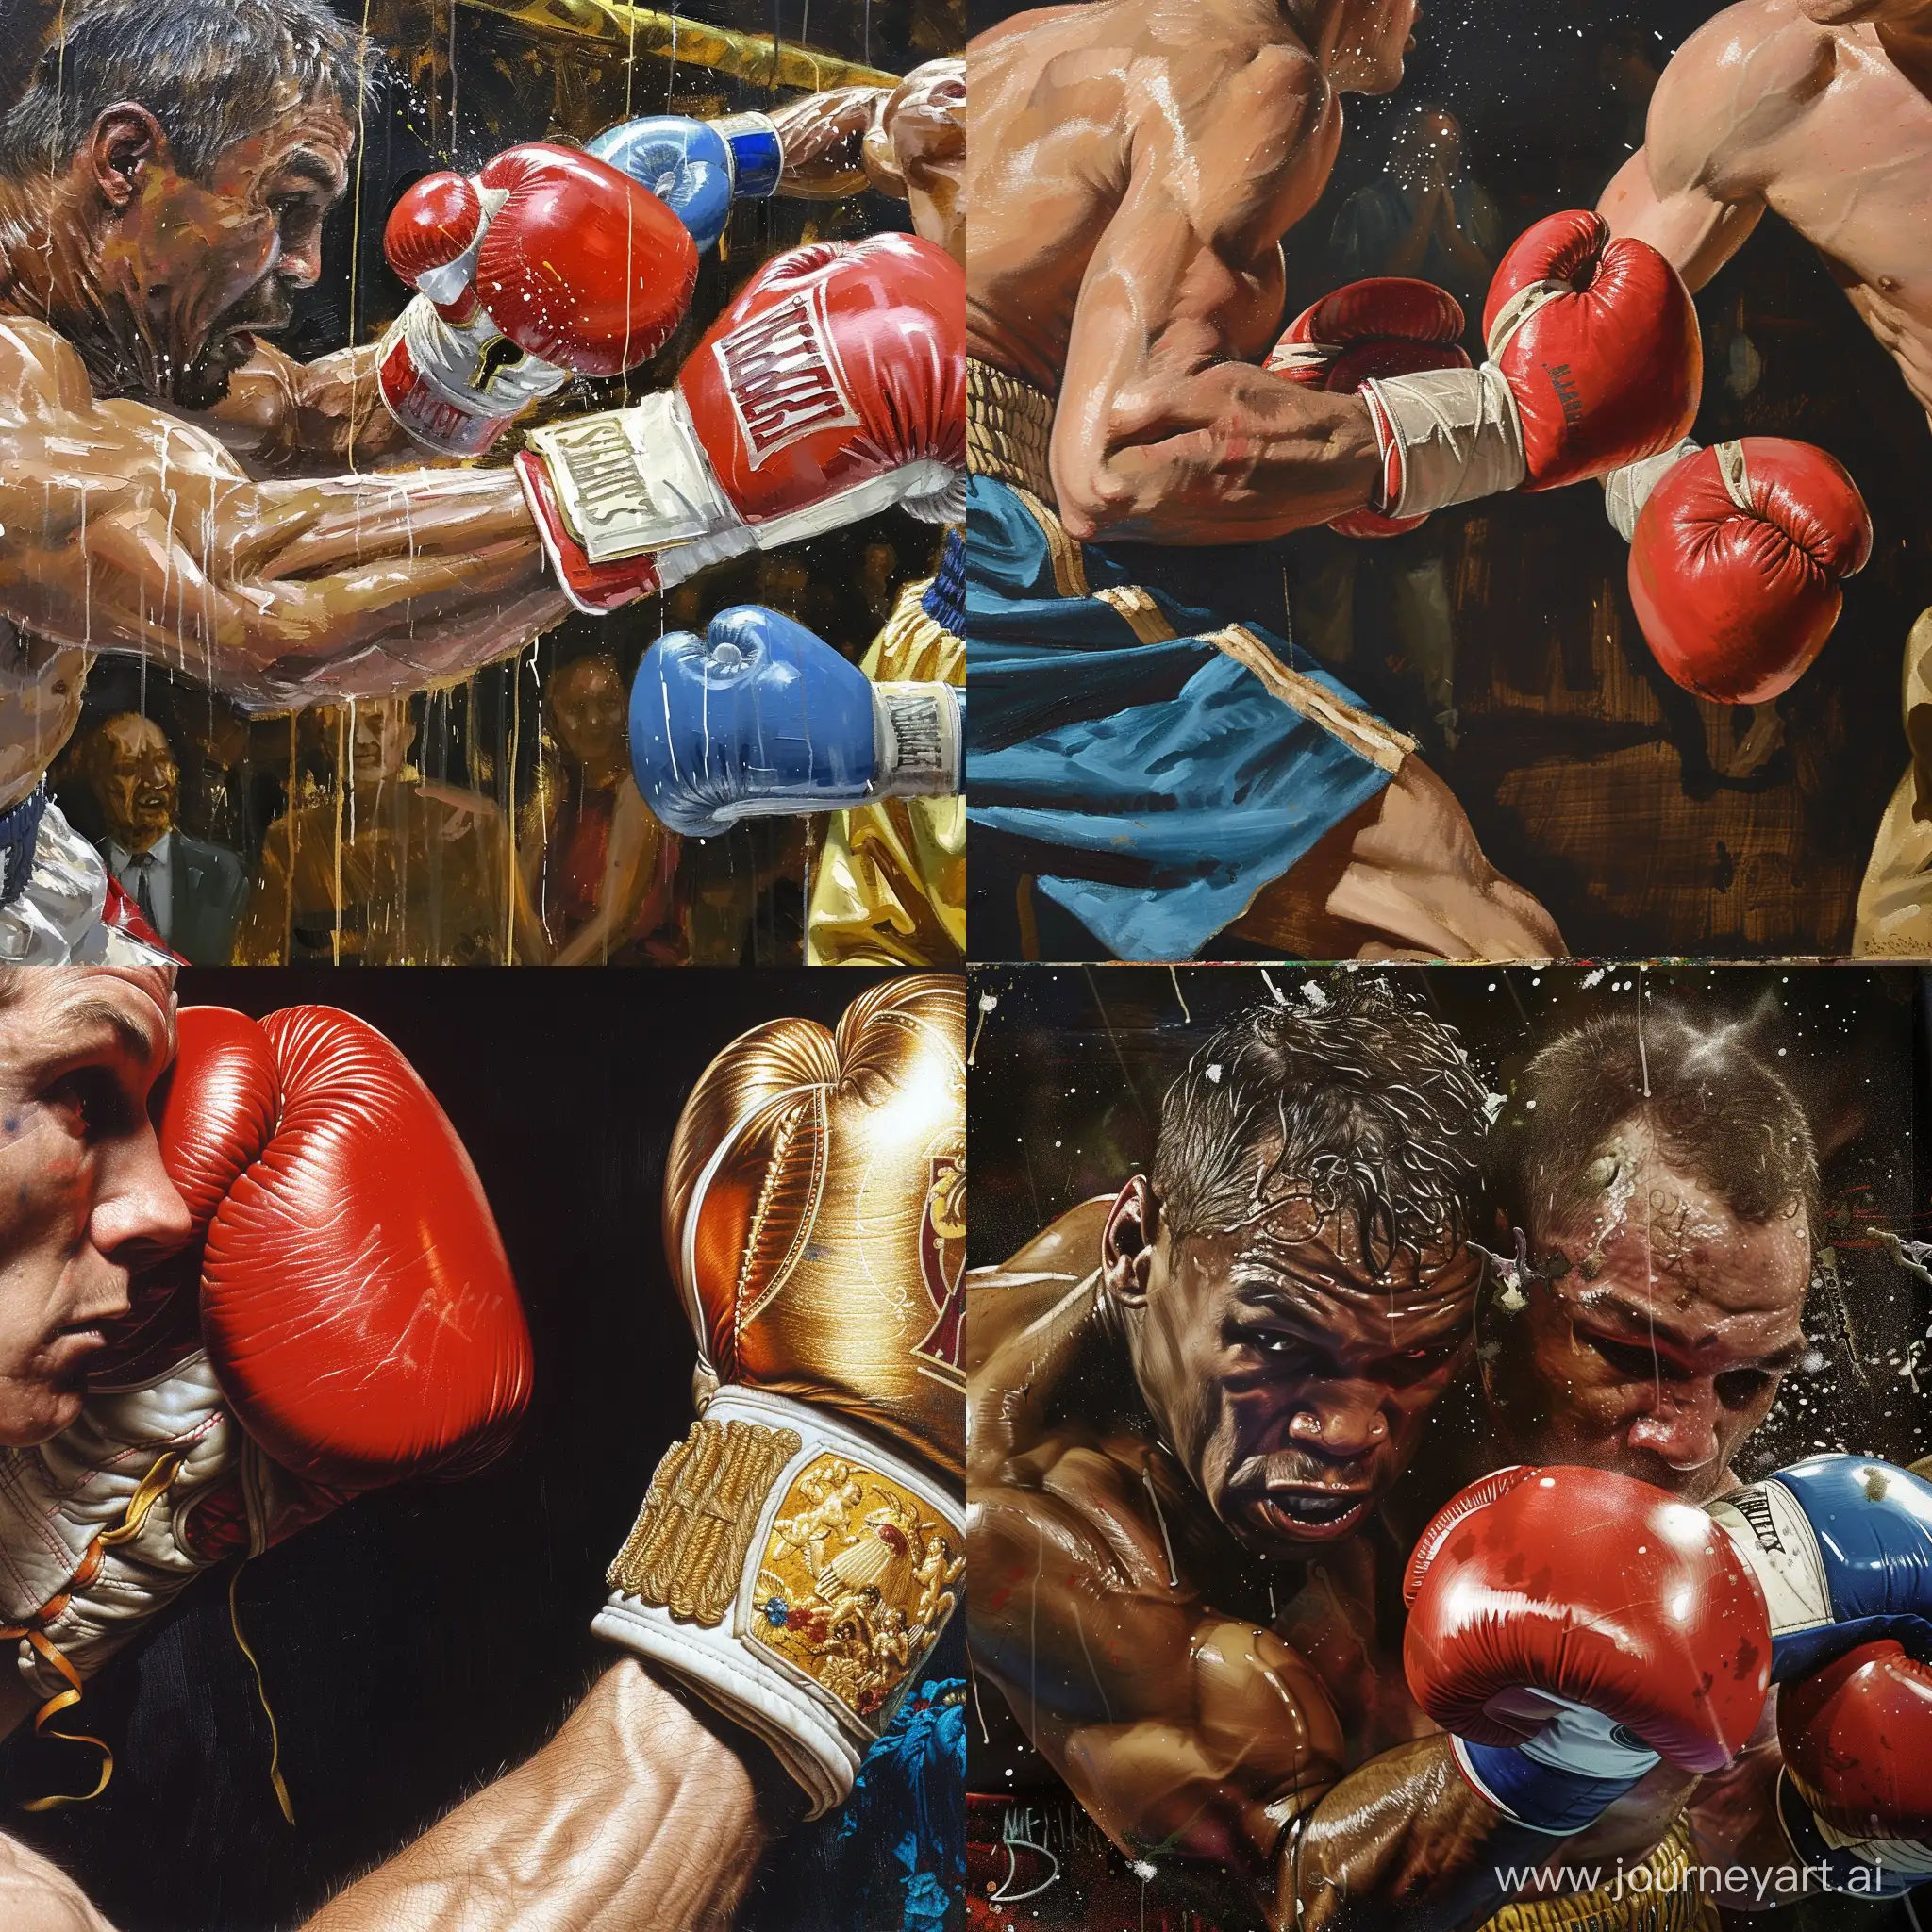 Intense-Boxing-Match-CloseUp-Baroque-Artstyle-Painting